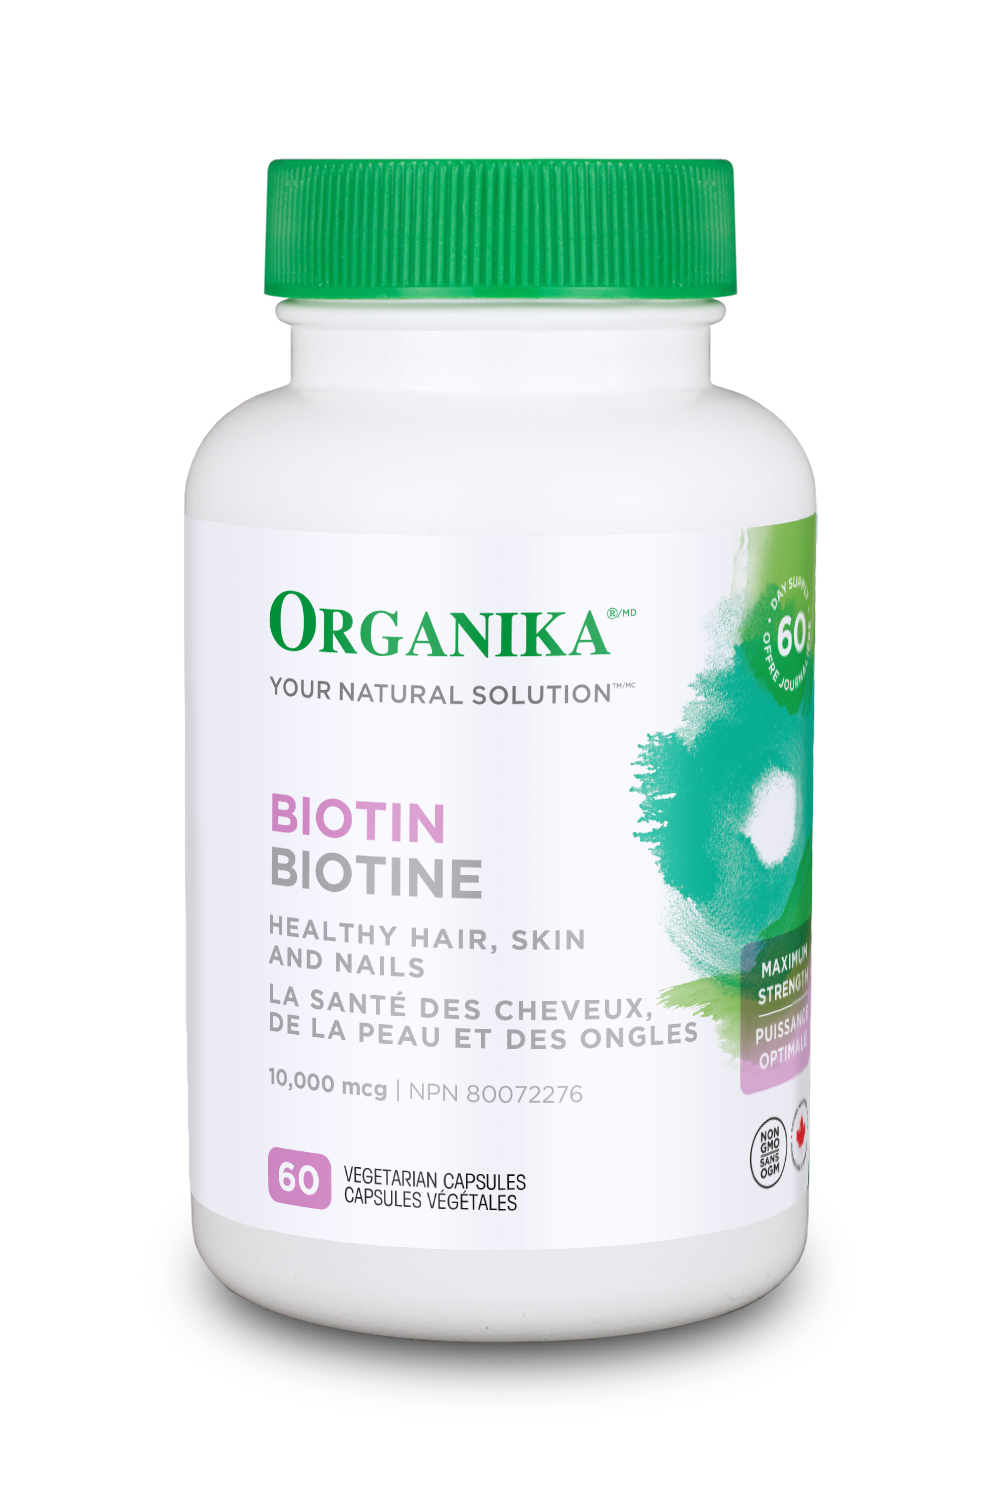 Organika - Biotin 10,000mcg (60 caps)